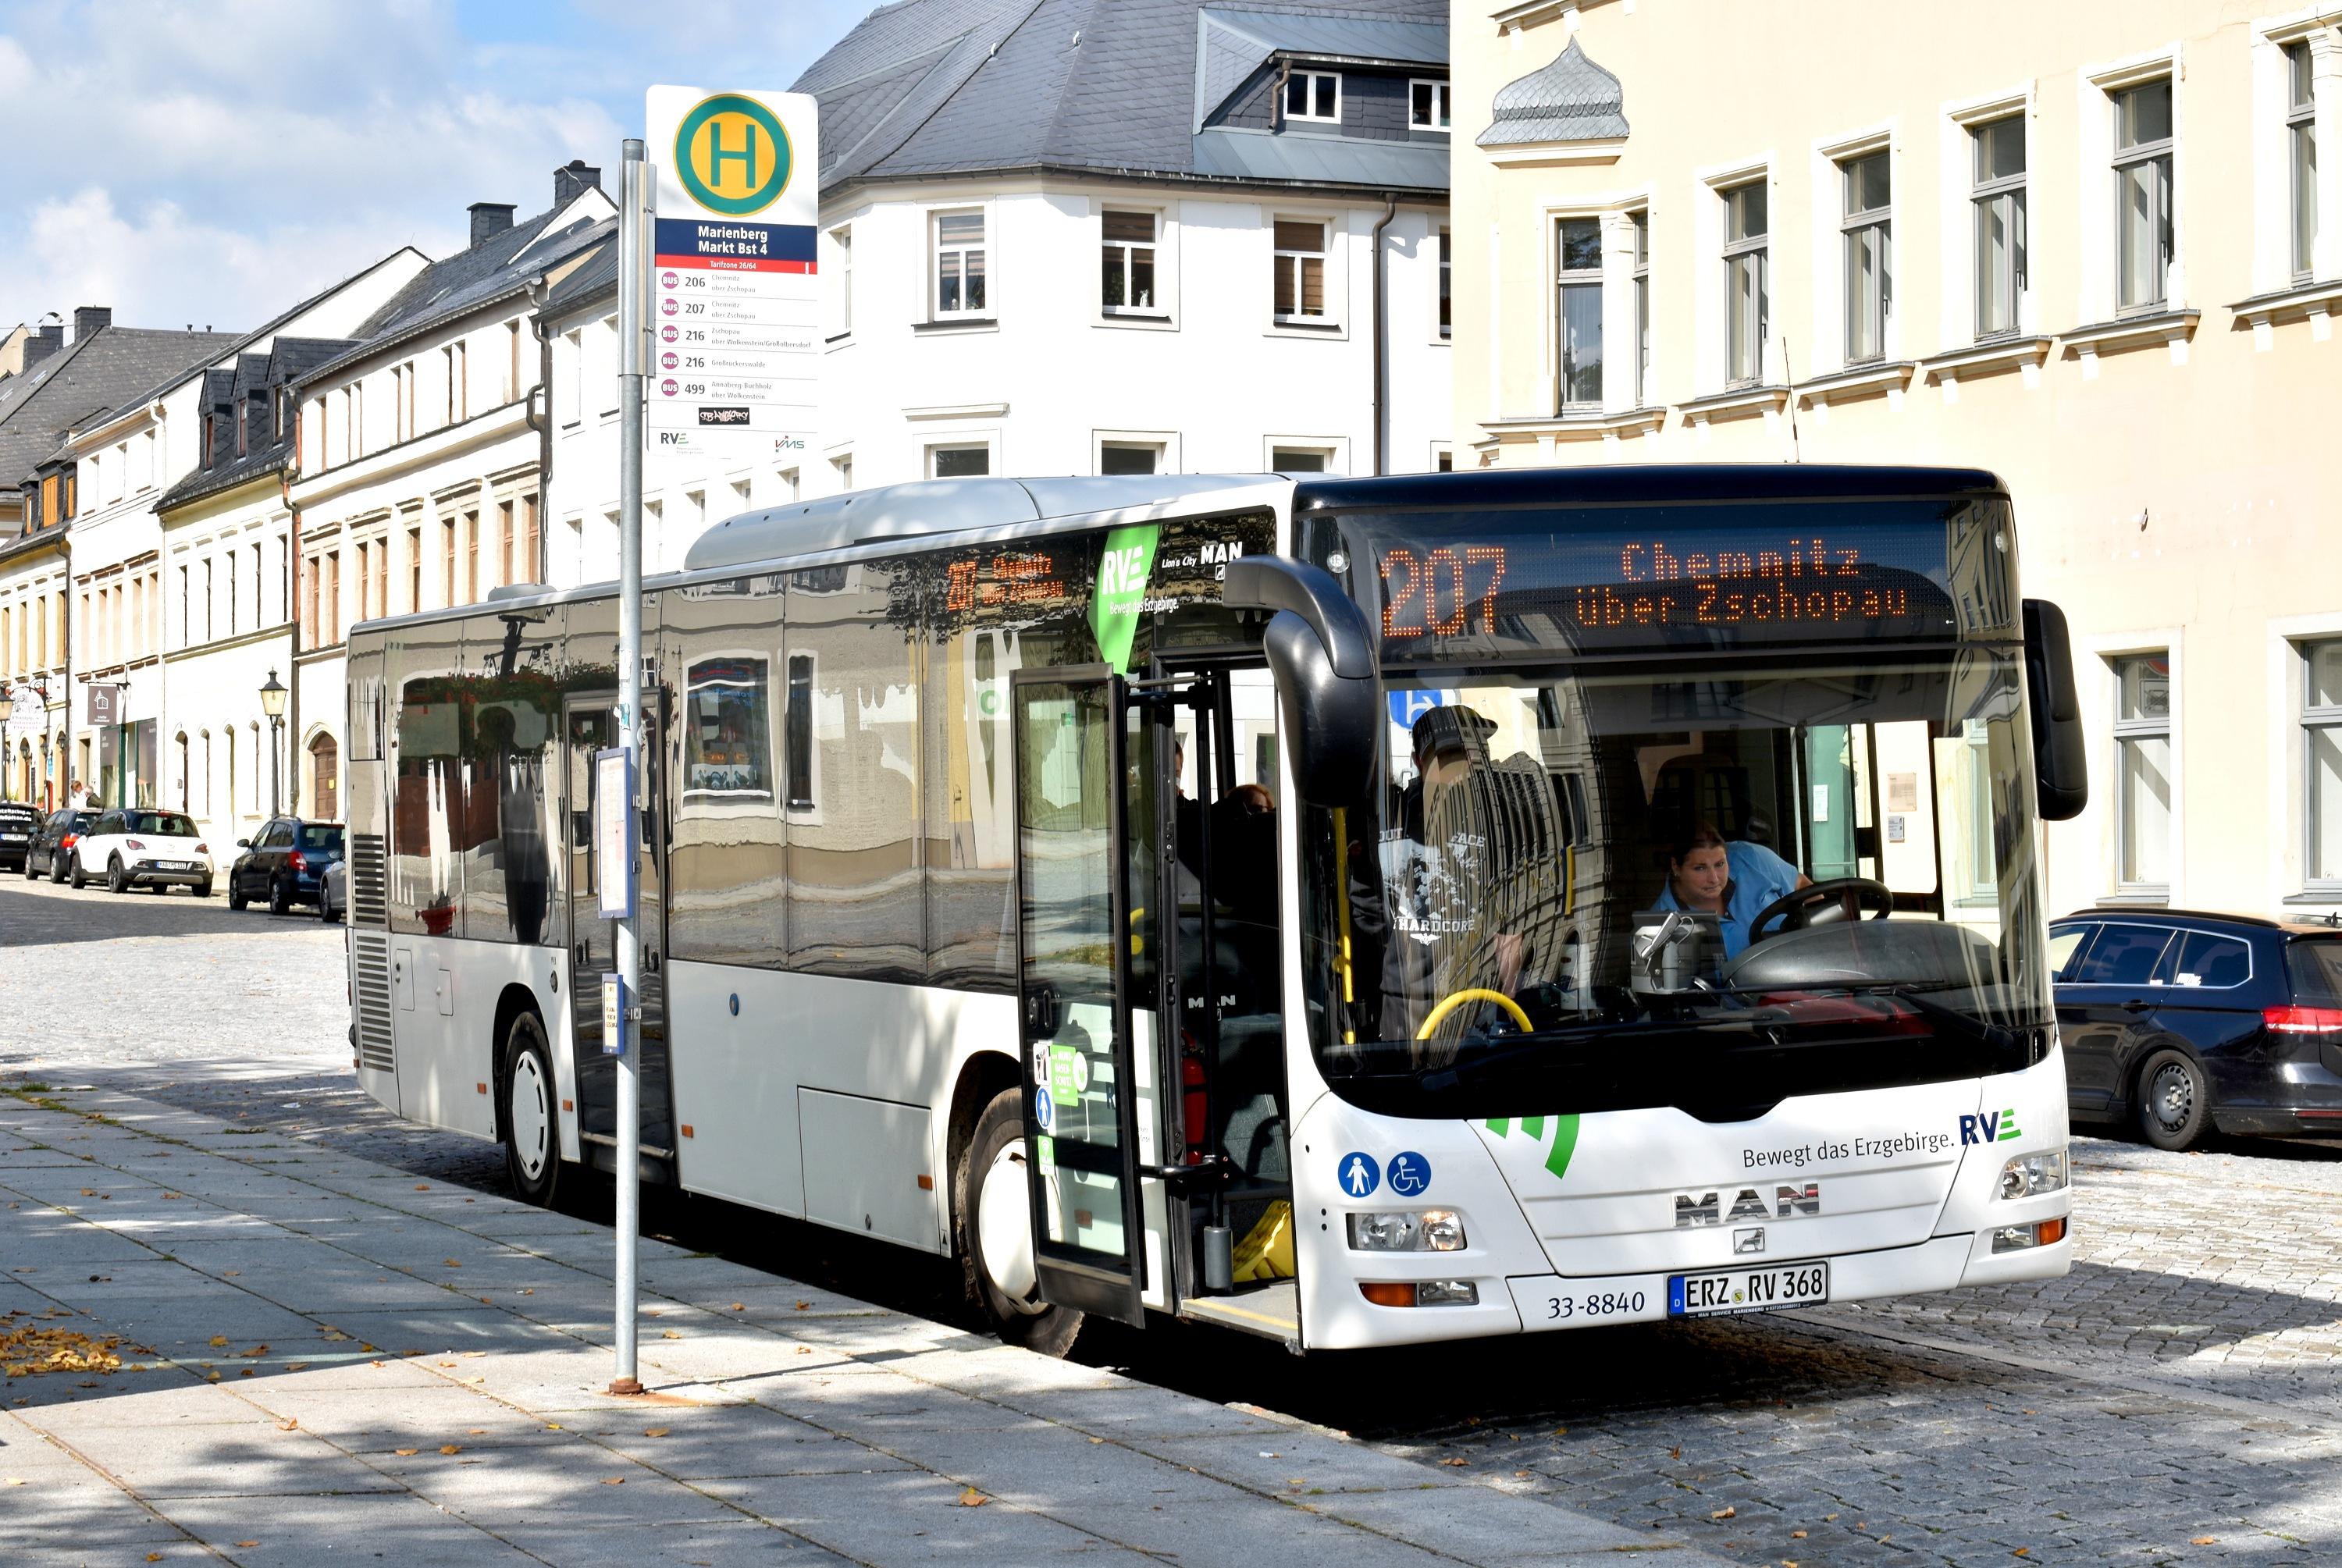 207 C-Omnibusbahnhof Marienberg Markt